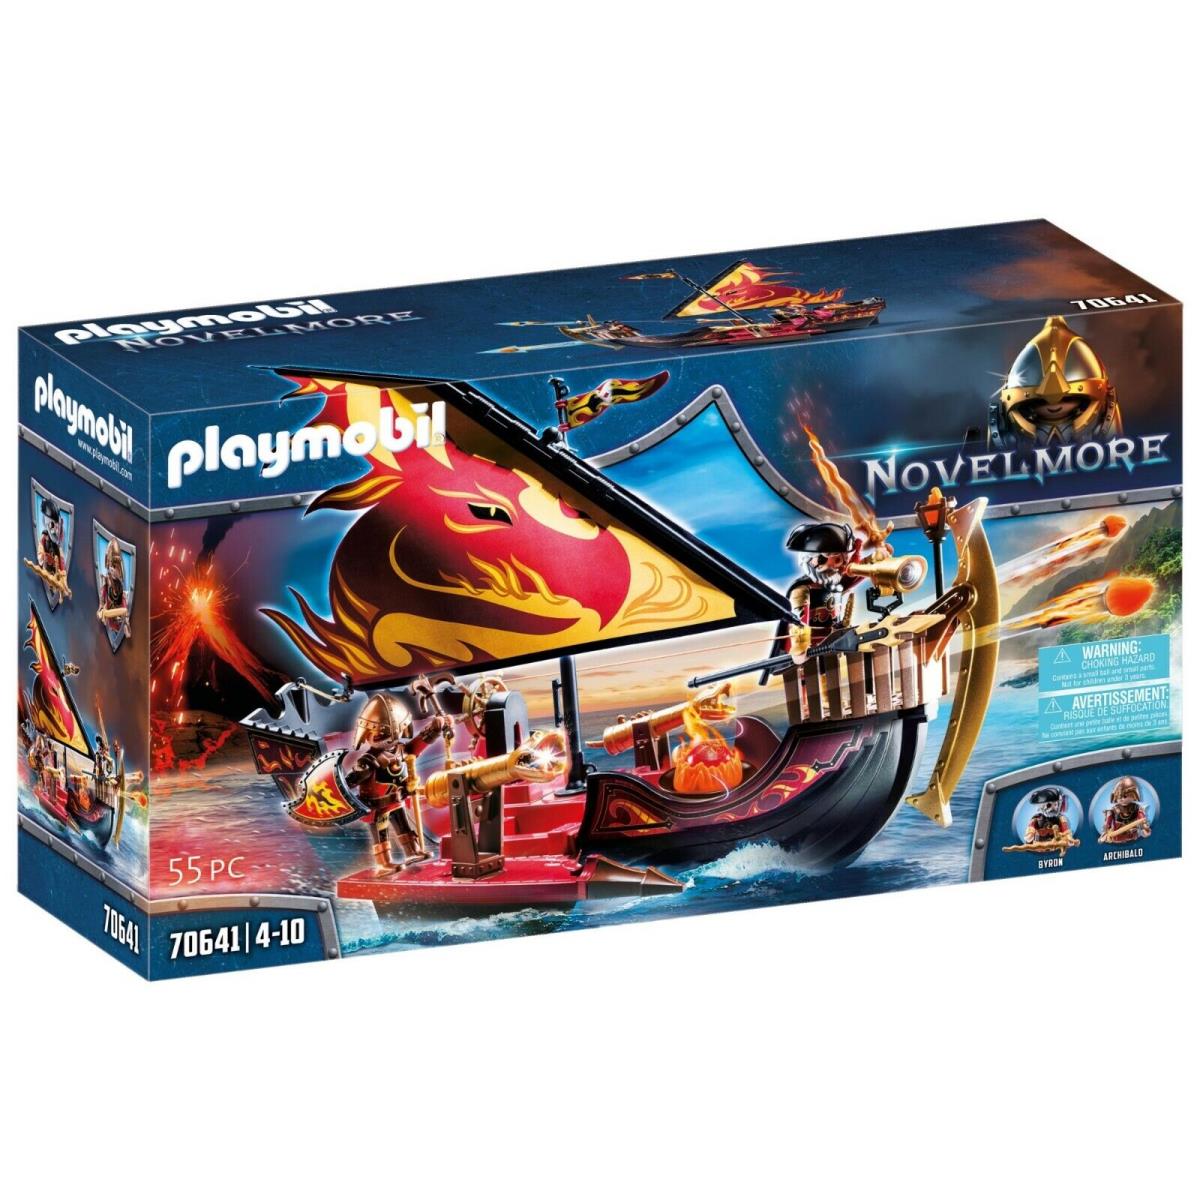 Playmobil Novelmore Burnham Raiders Fire Ship Construction Play Set 70641